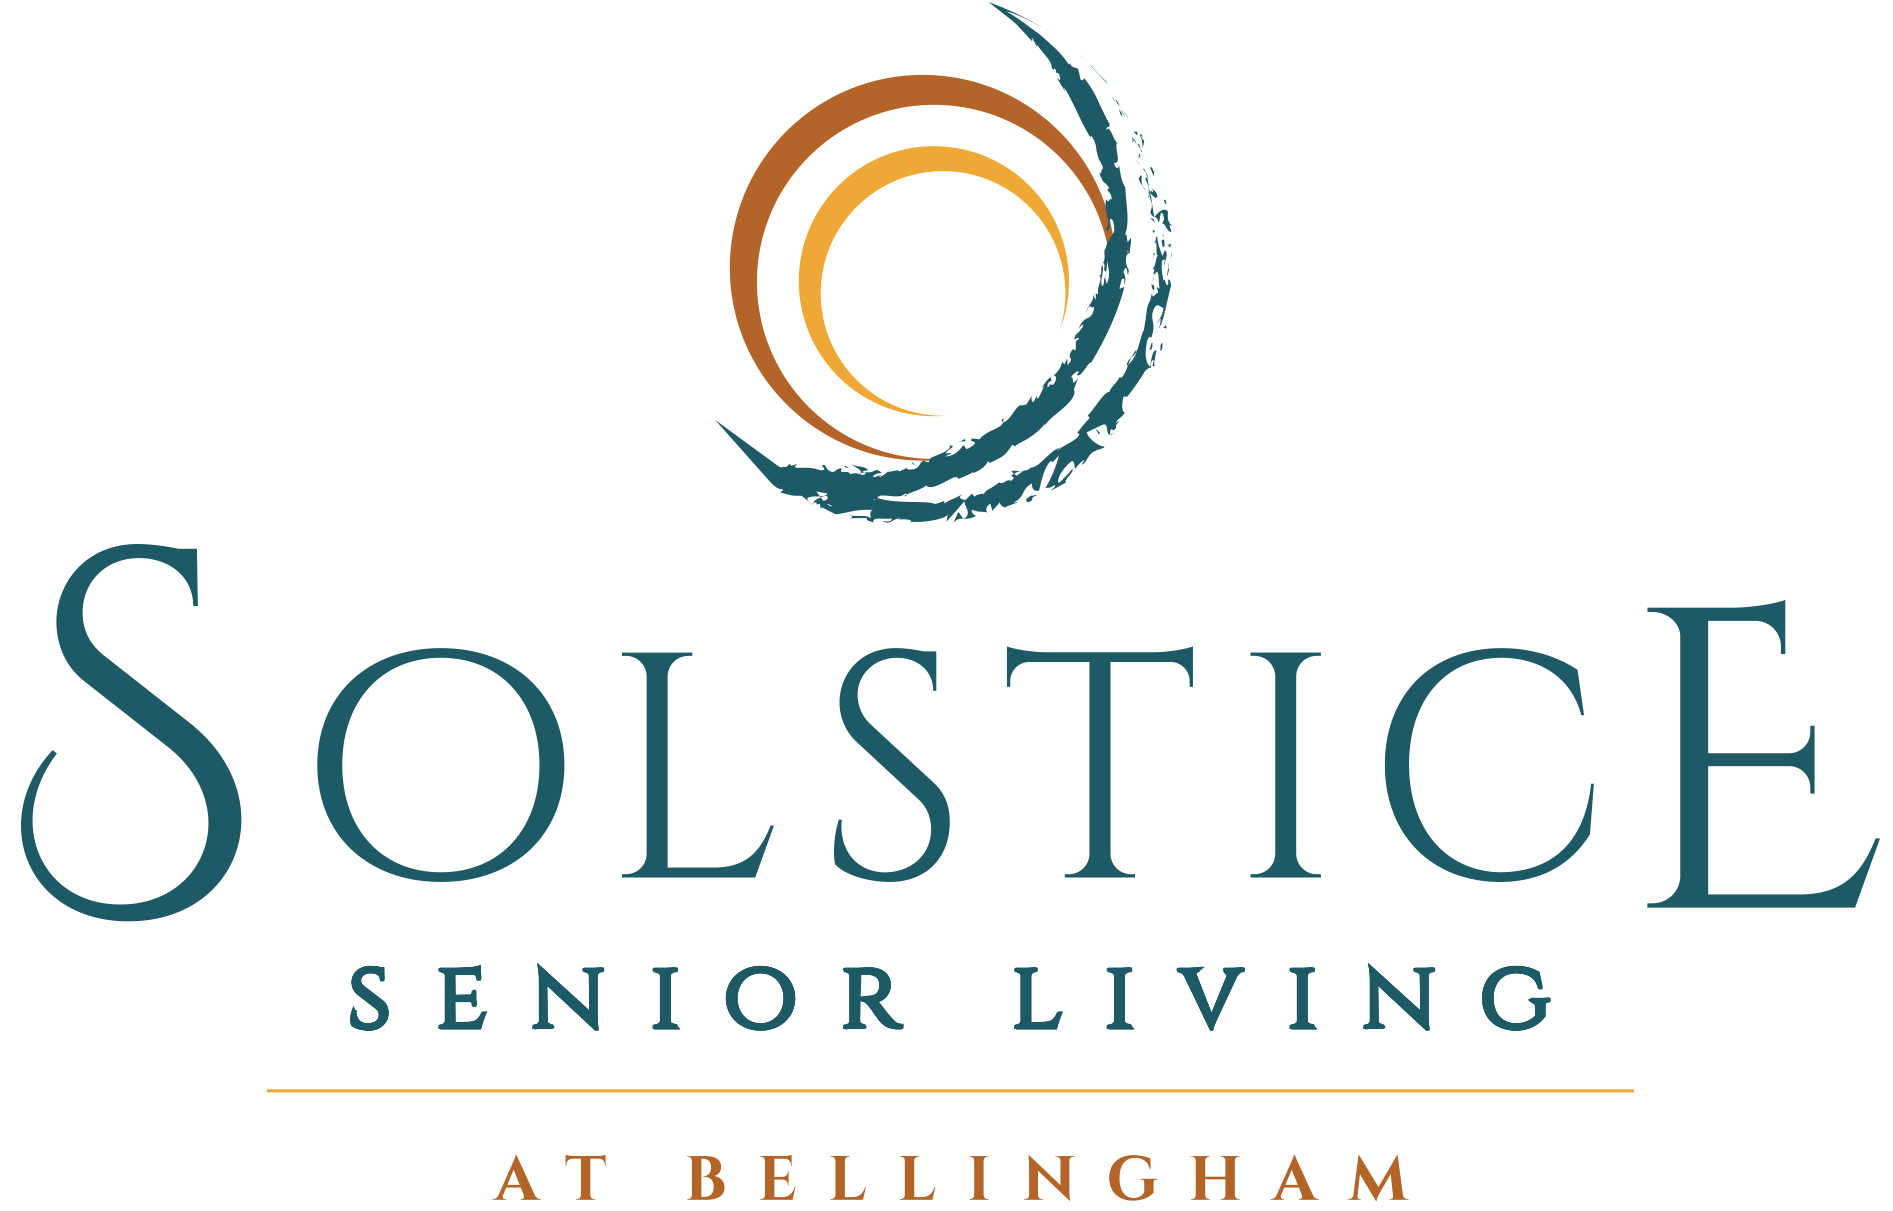 Solstice Senior Living at Bellingham